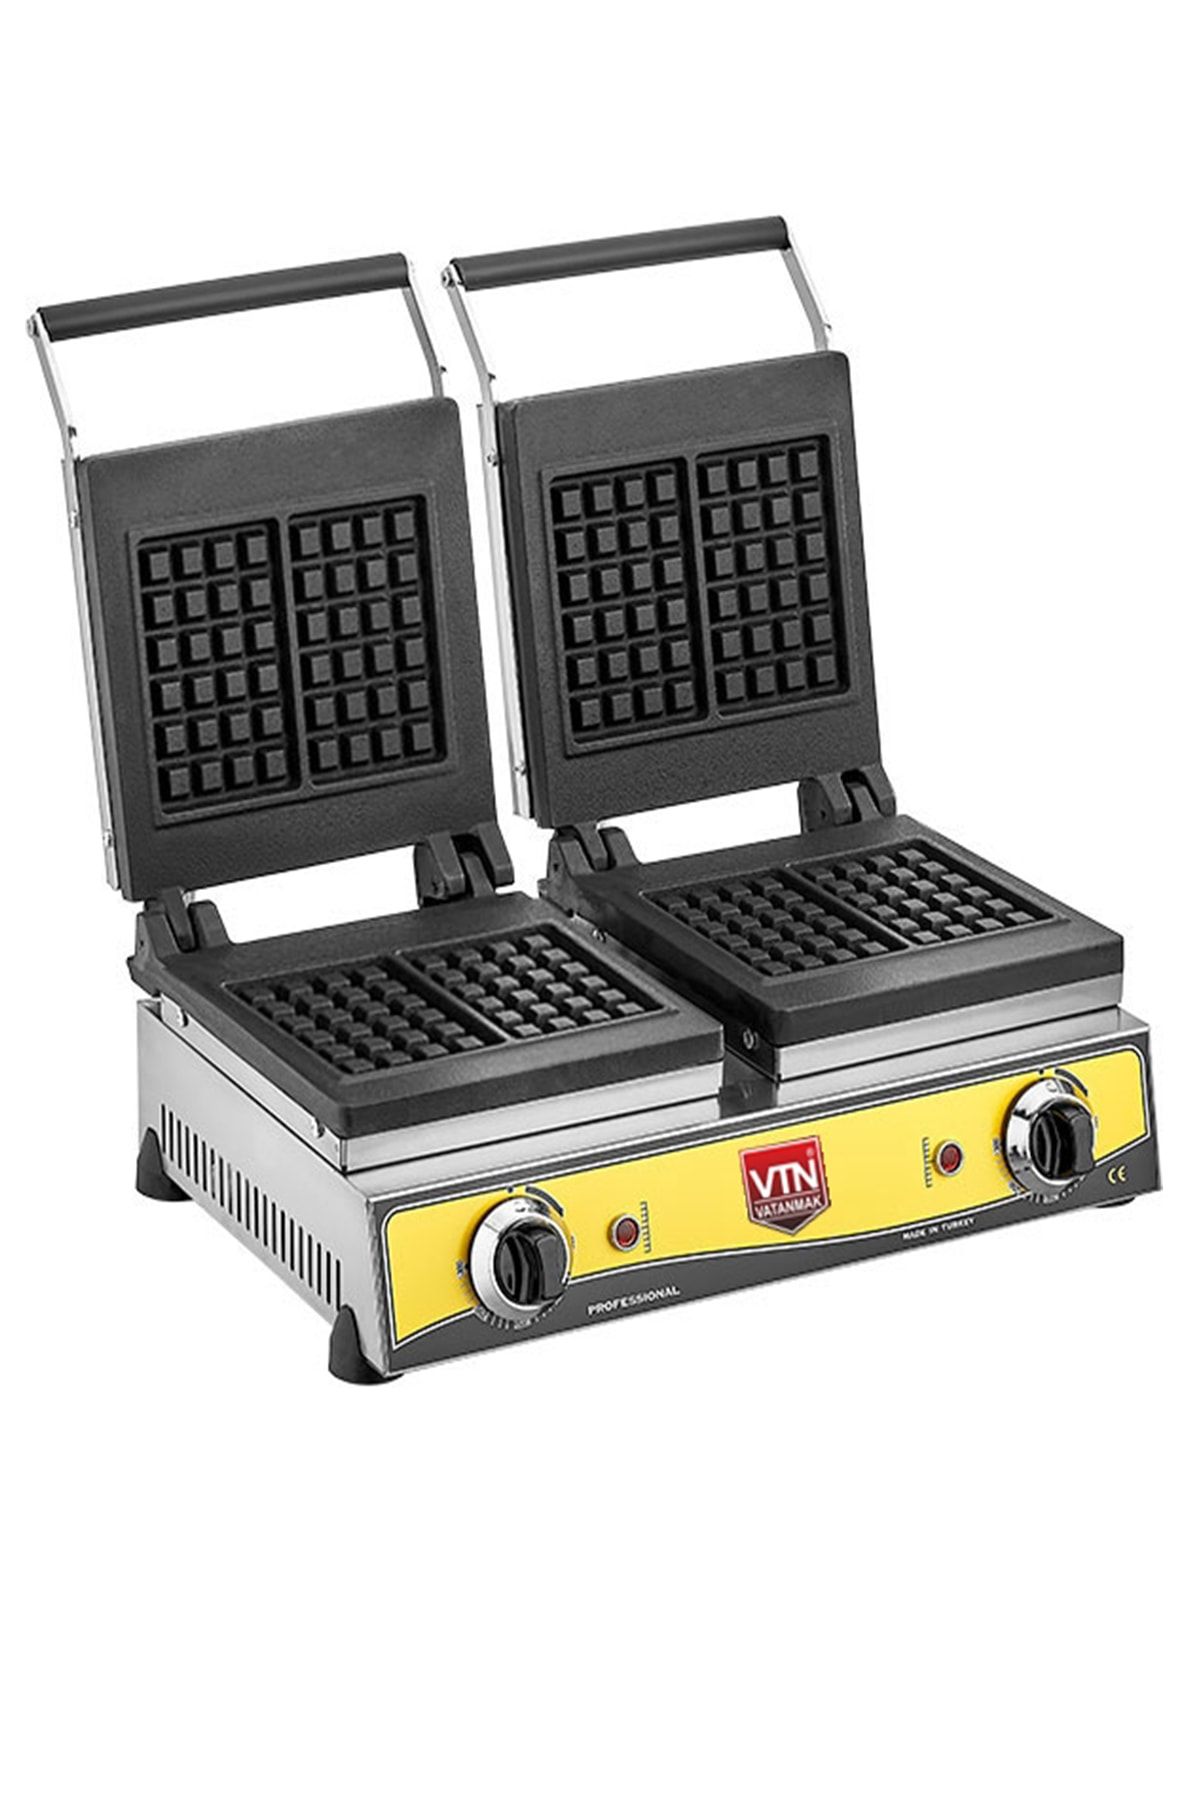 VTN Çiftli Kare Model Waffle Makinası Elektrikli 16 Cm